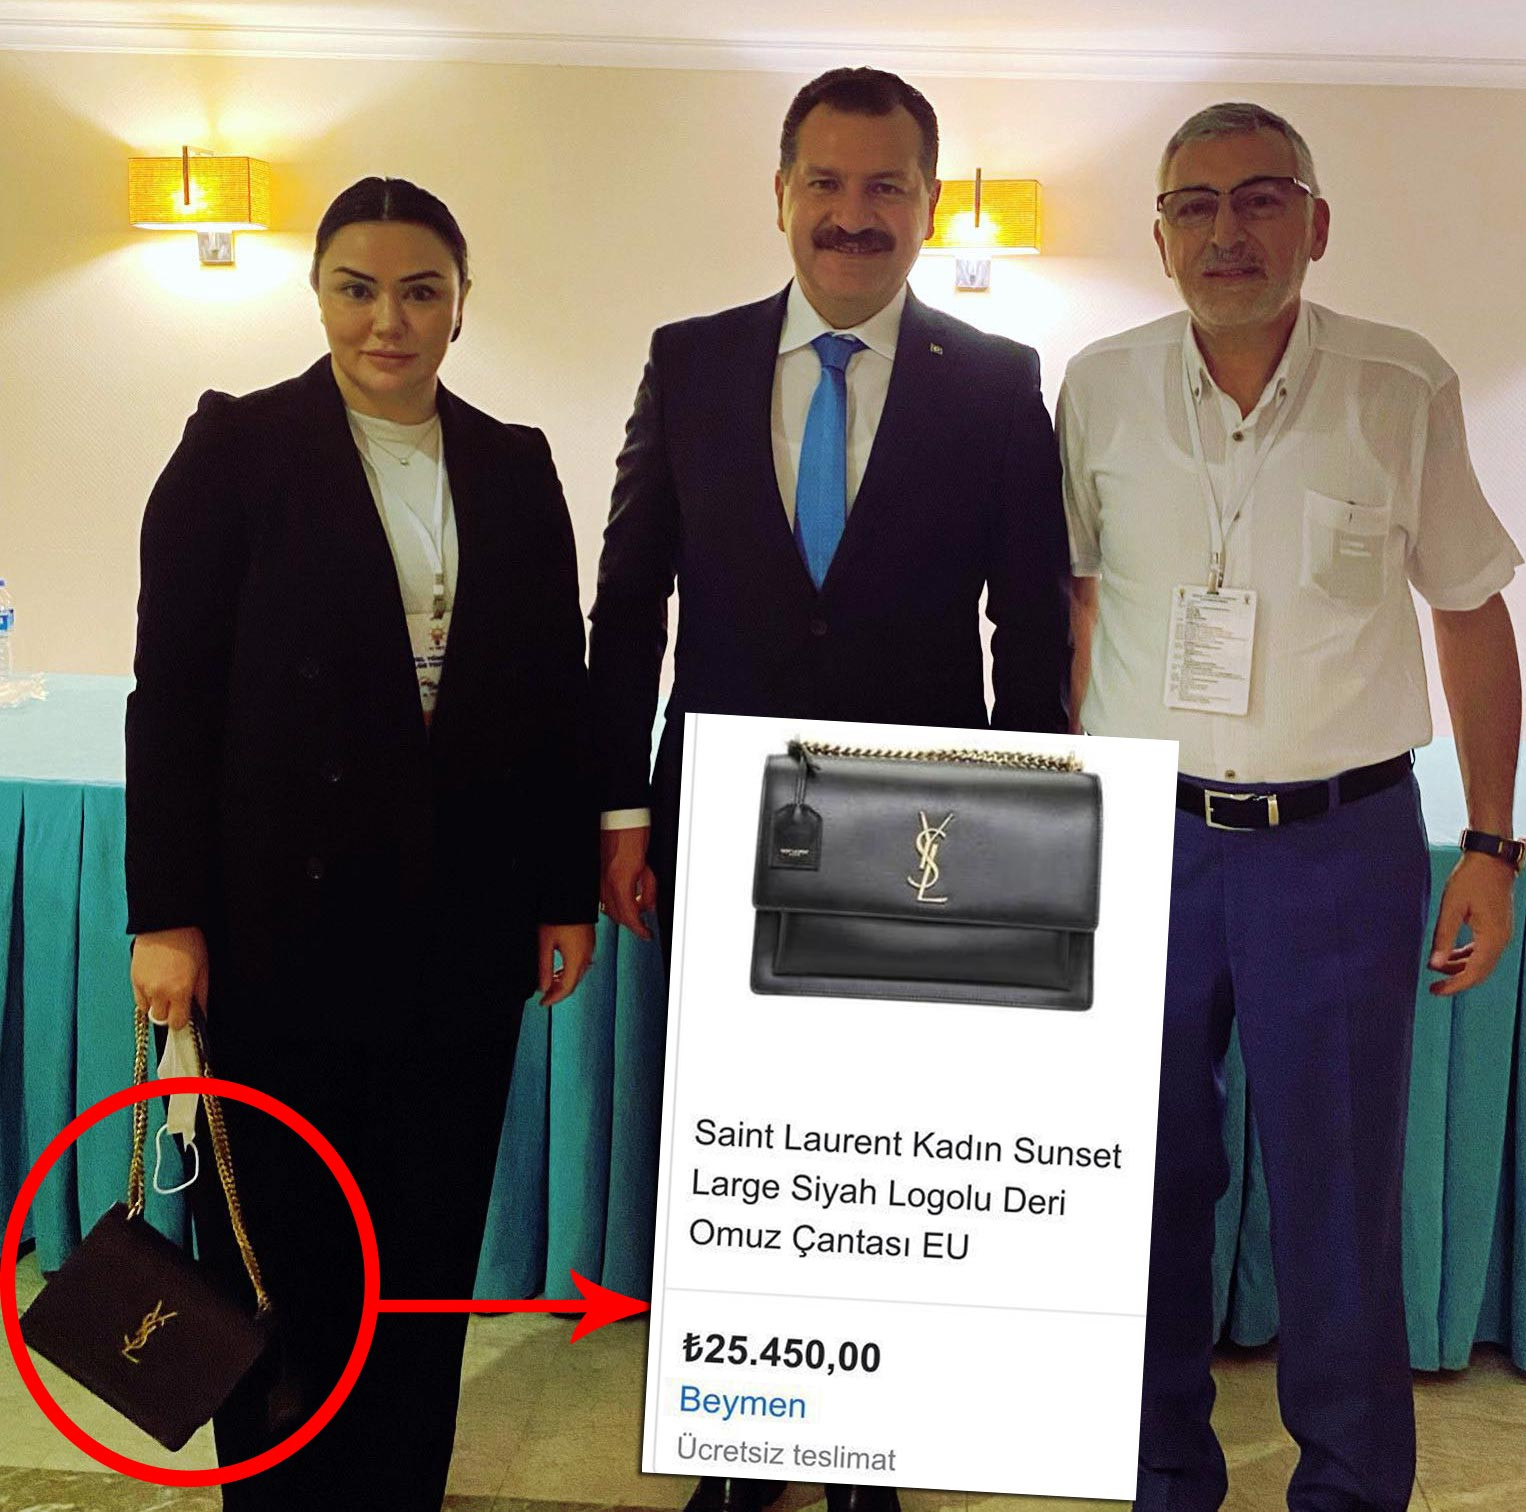 AKP'li başkanın çantasının fiyatı şoke etti - Resim : 1